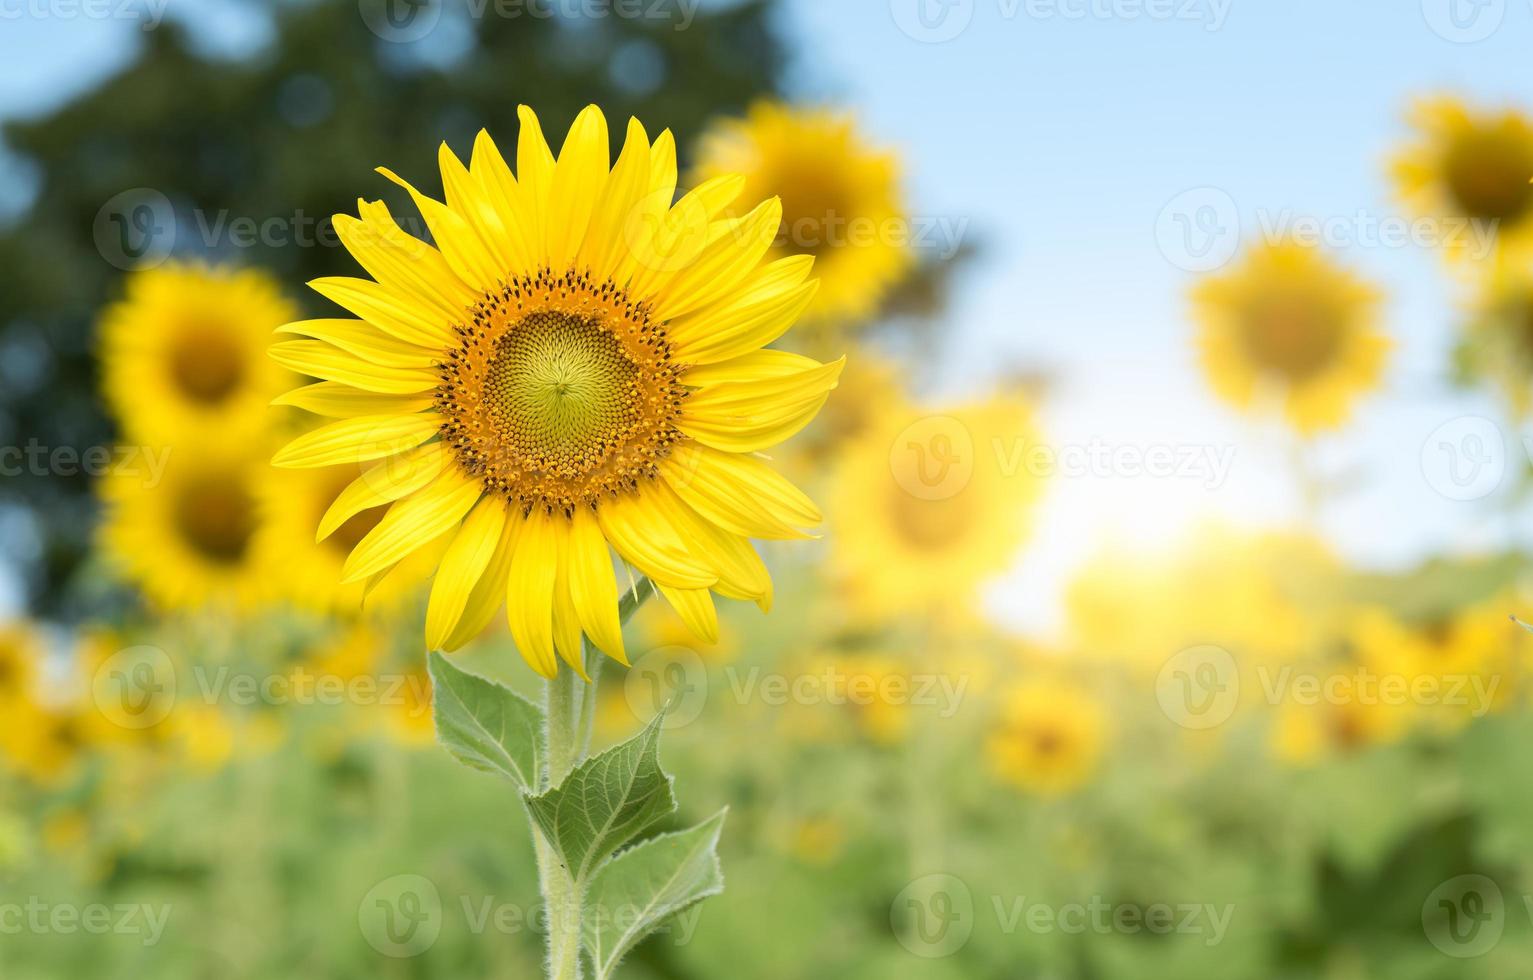 sunflower flower on blue sky background photo